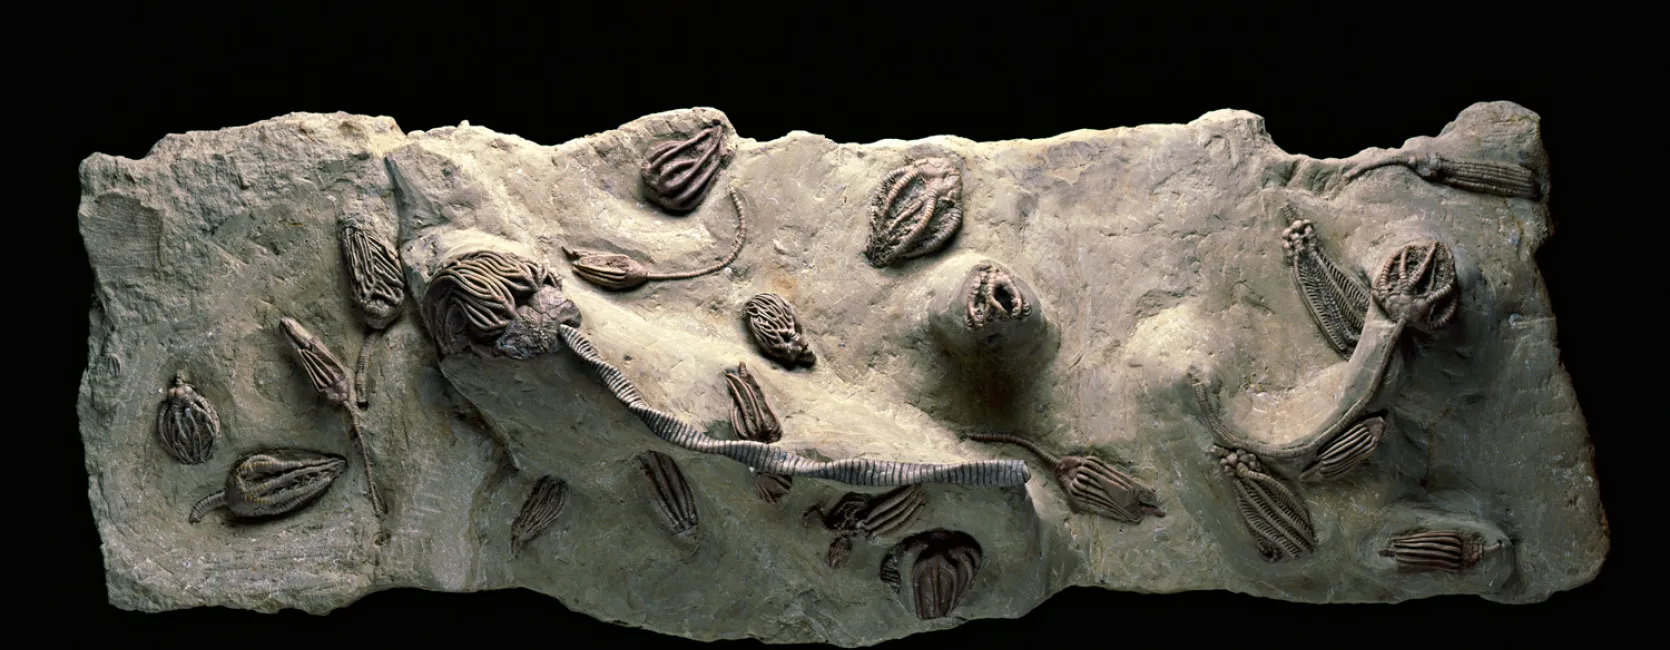 fossil crinoids